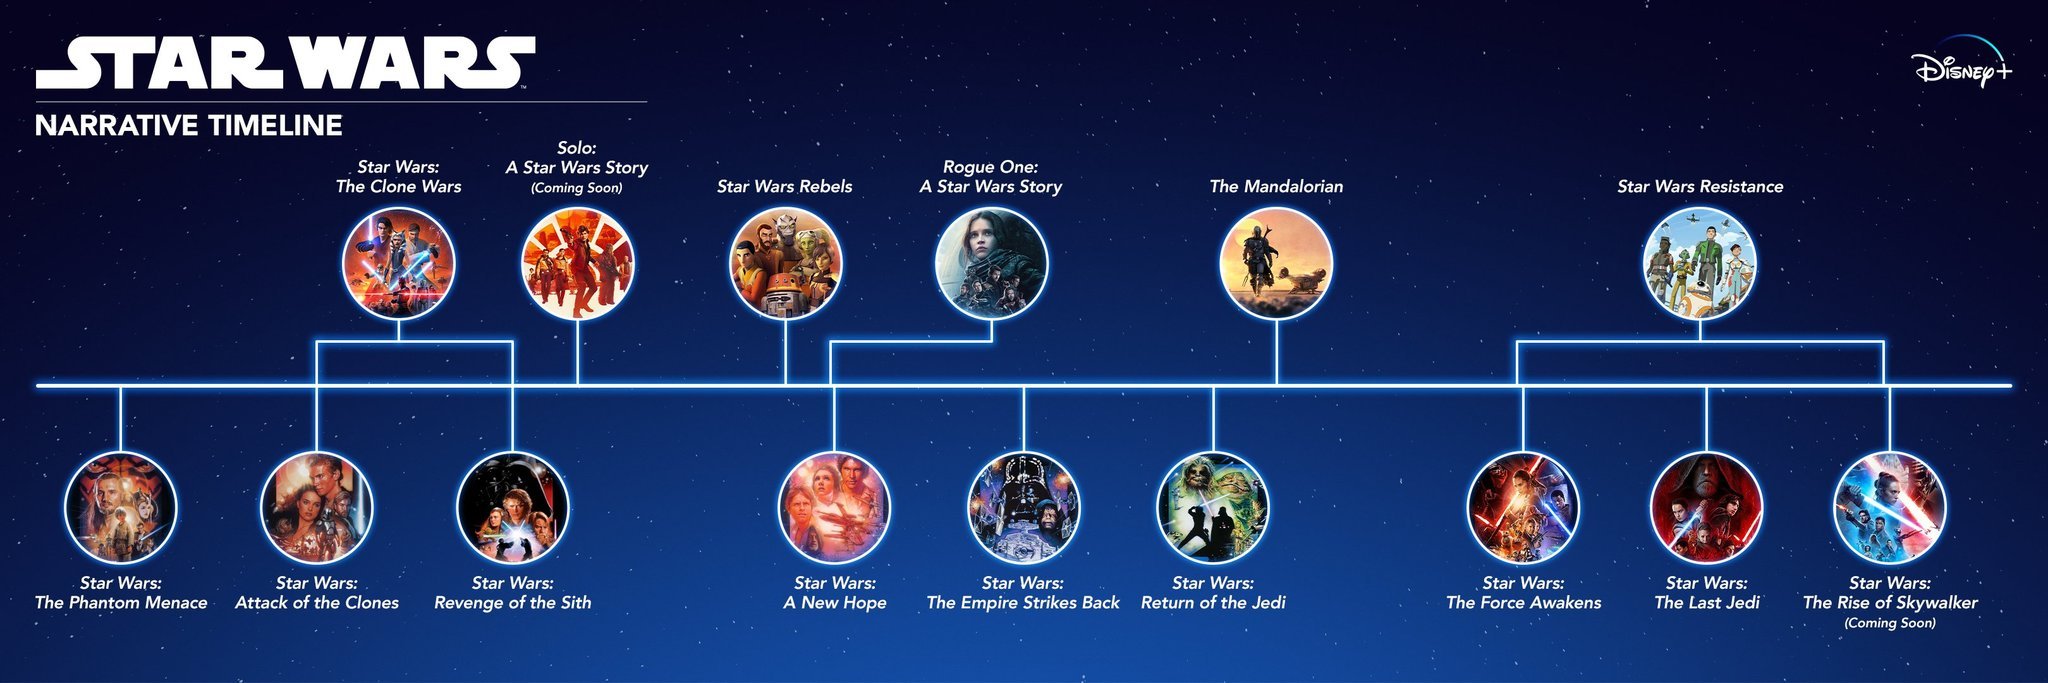 Disney Plus Star Wars Ultimate Timeline